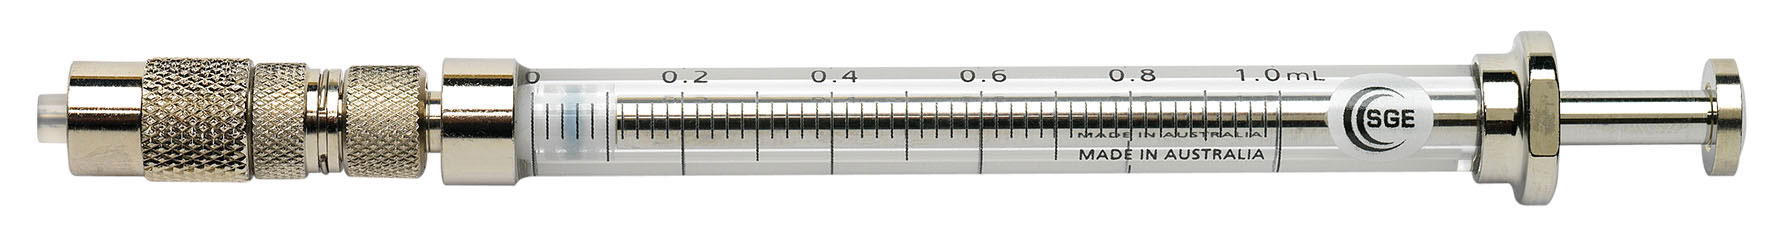 Jeringa luer lock con válvula.SGE. Volumen: 2,5ml. Modelo: 2.5MDR-VLL-GT. Válvula: Push-pull. Émbolo rec. (u.): 032-031852. Válvula rec. (u.): 032-031907